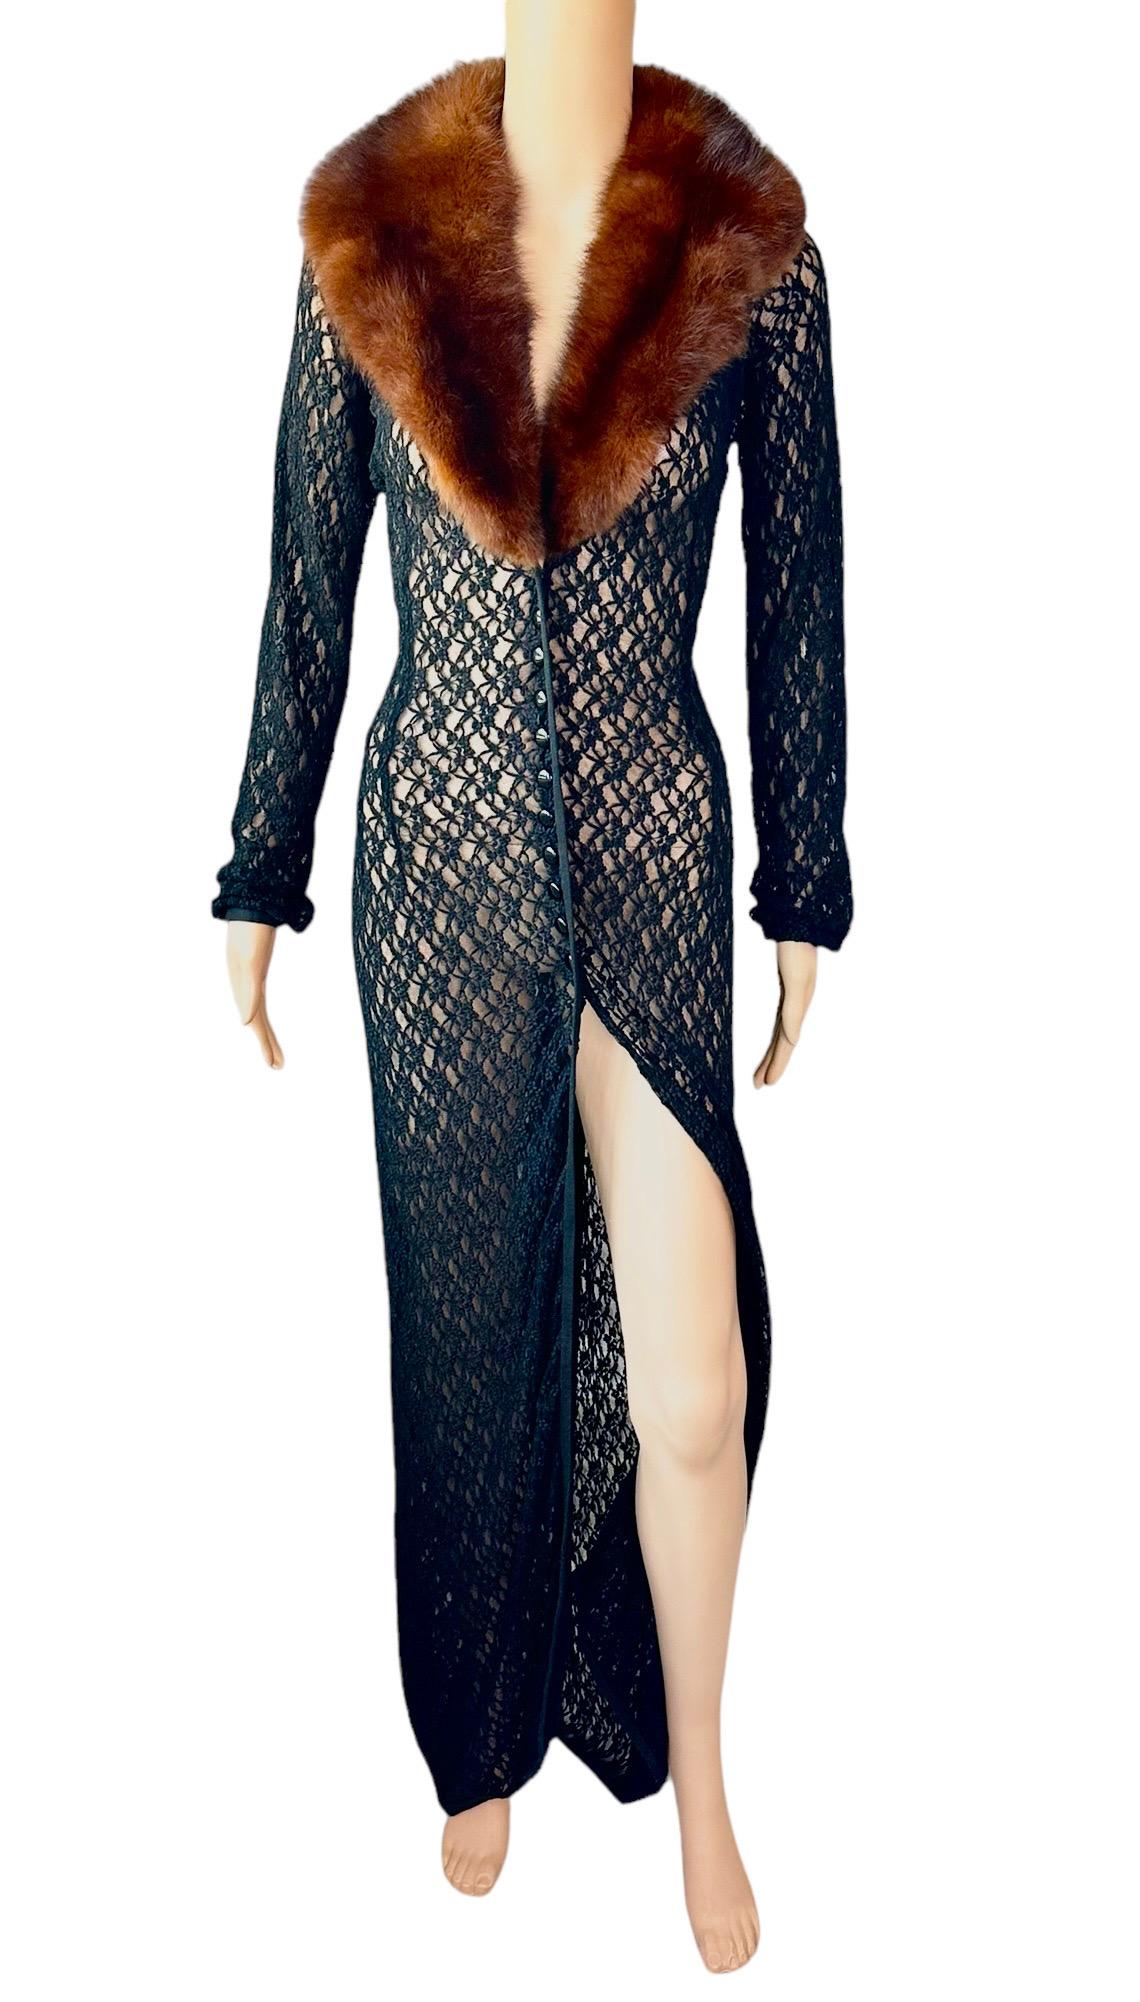 Women's or Men's Dolce & Gabbana S/S 1997 Sable Fur Collar Sheer Knit Black Cardigan Coat Dress For Sale